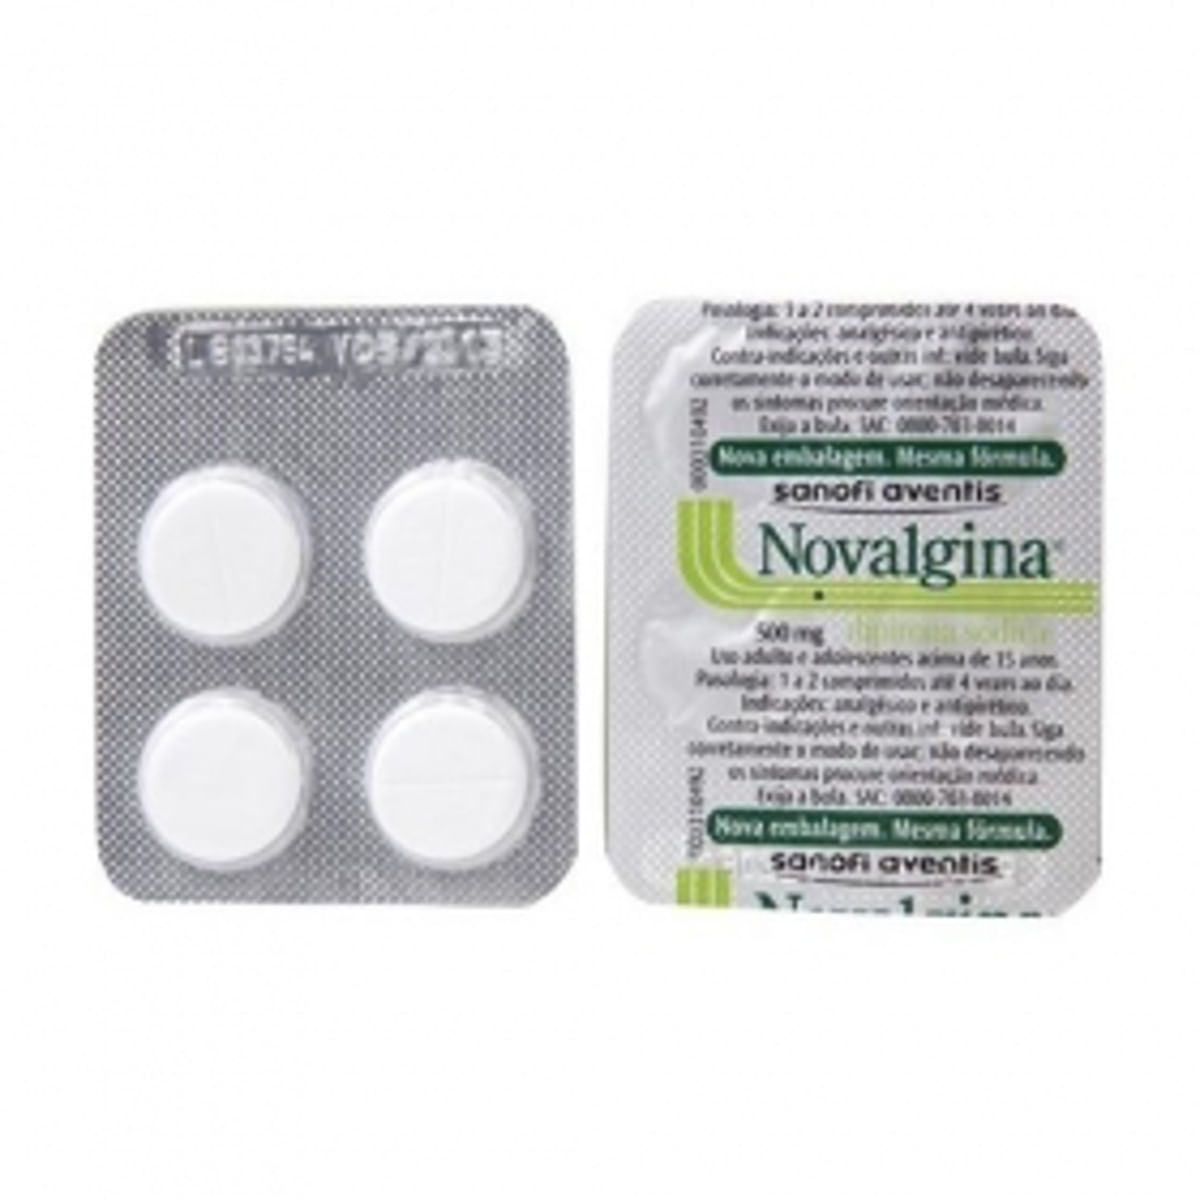 novalgina-4-comprimidos-1.jpg